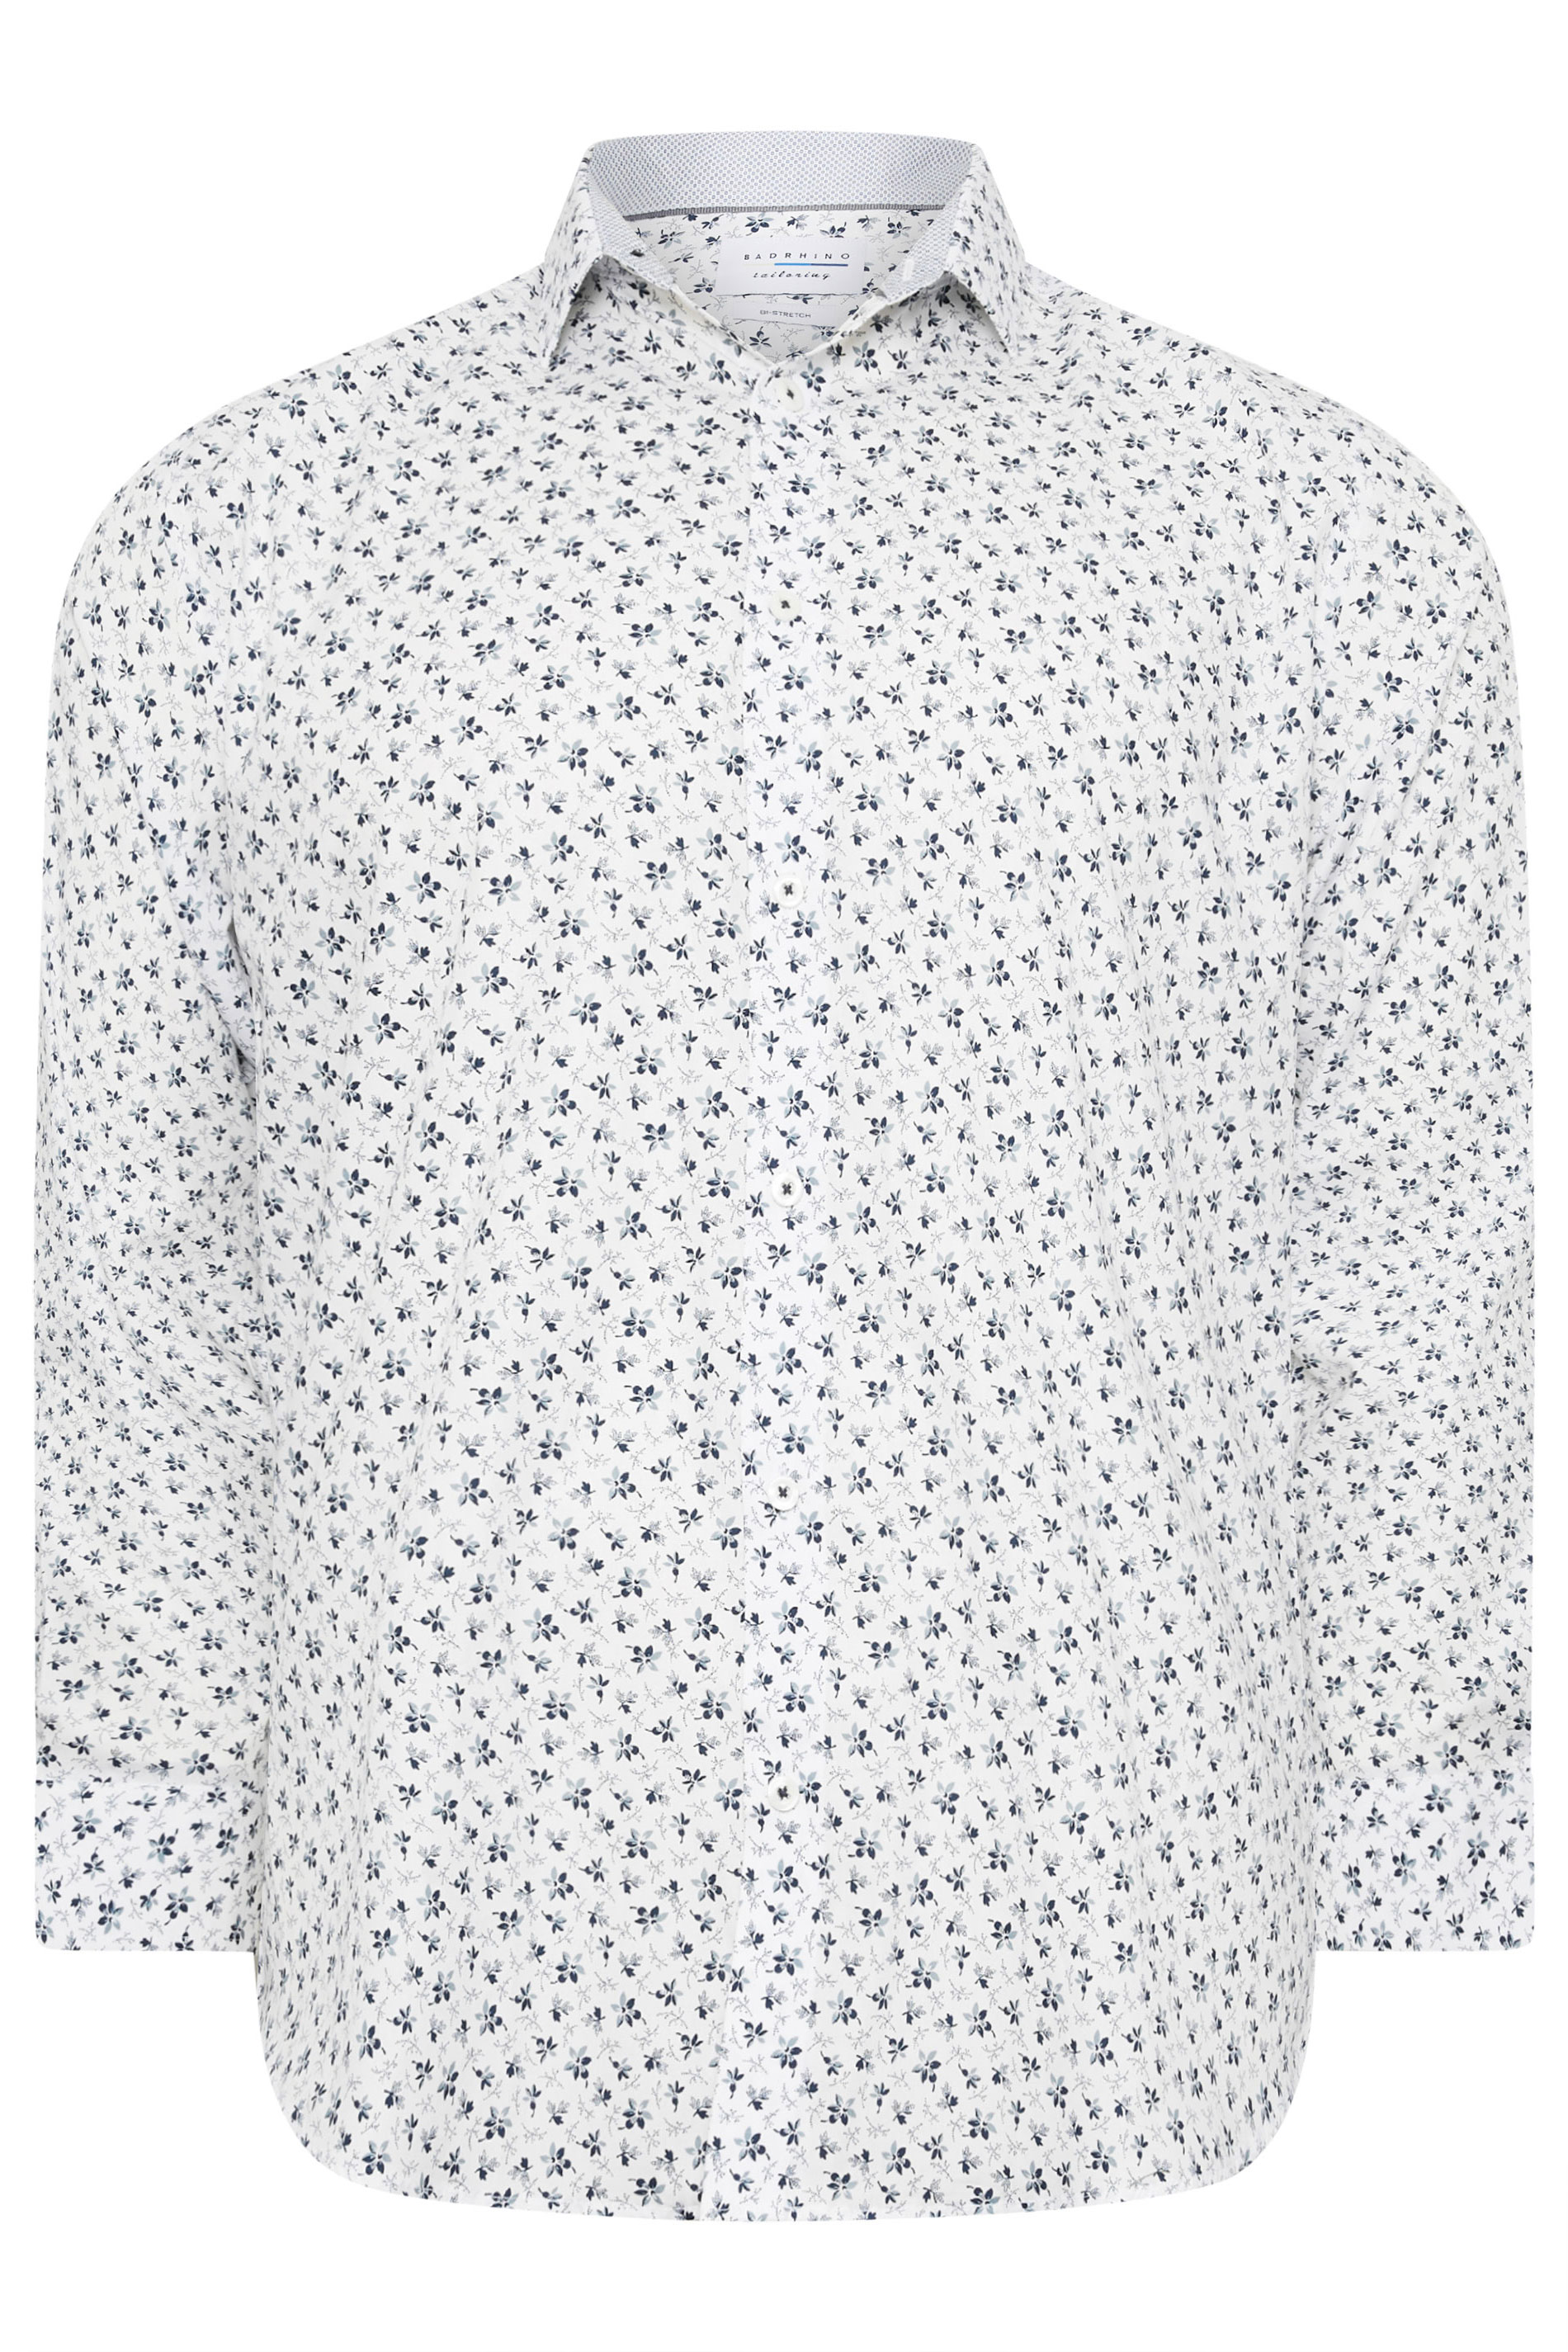 BadRhino Big & Tall Premium White & Blue Floral Print Long Sleeve Shirt | BadRhino 3